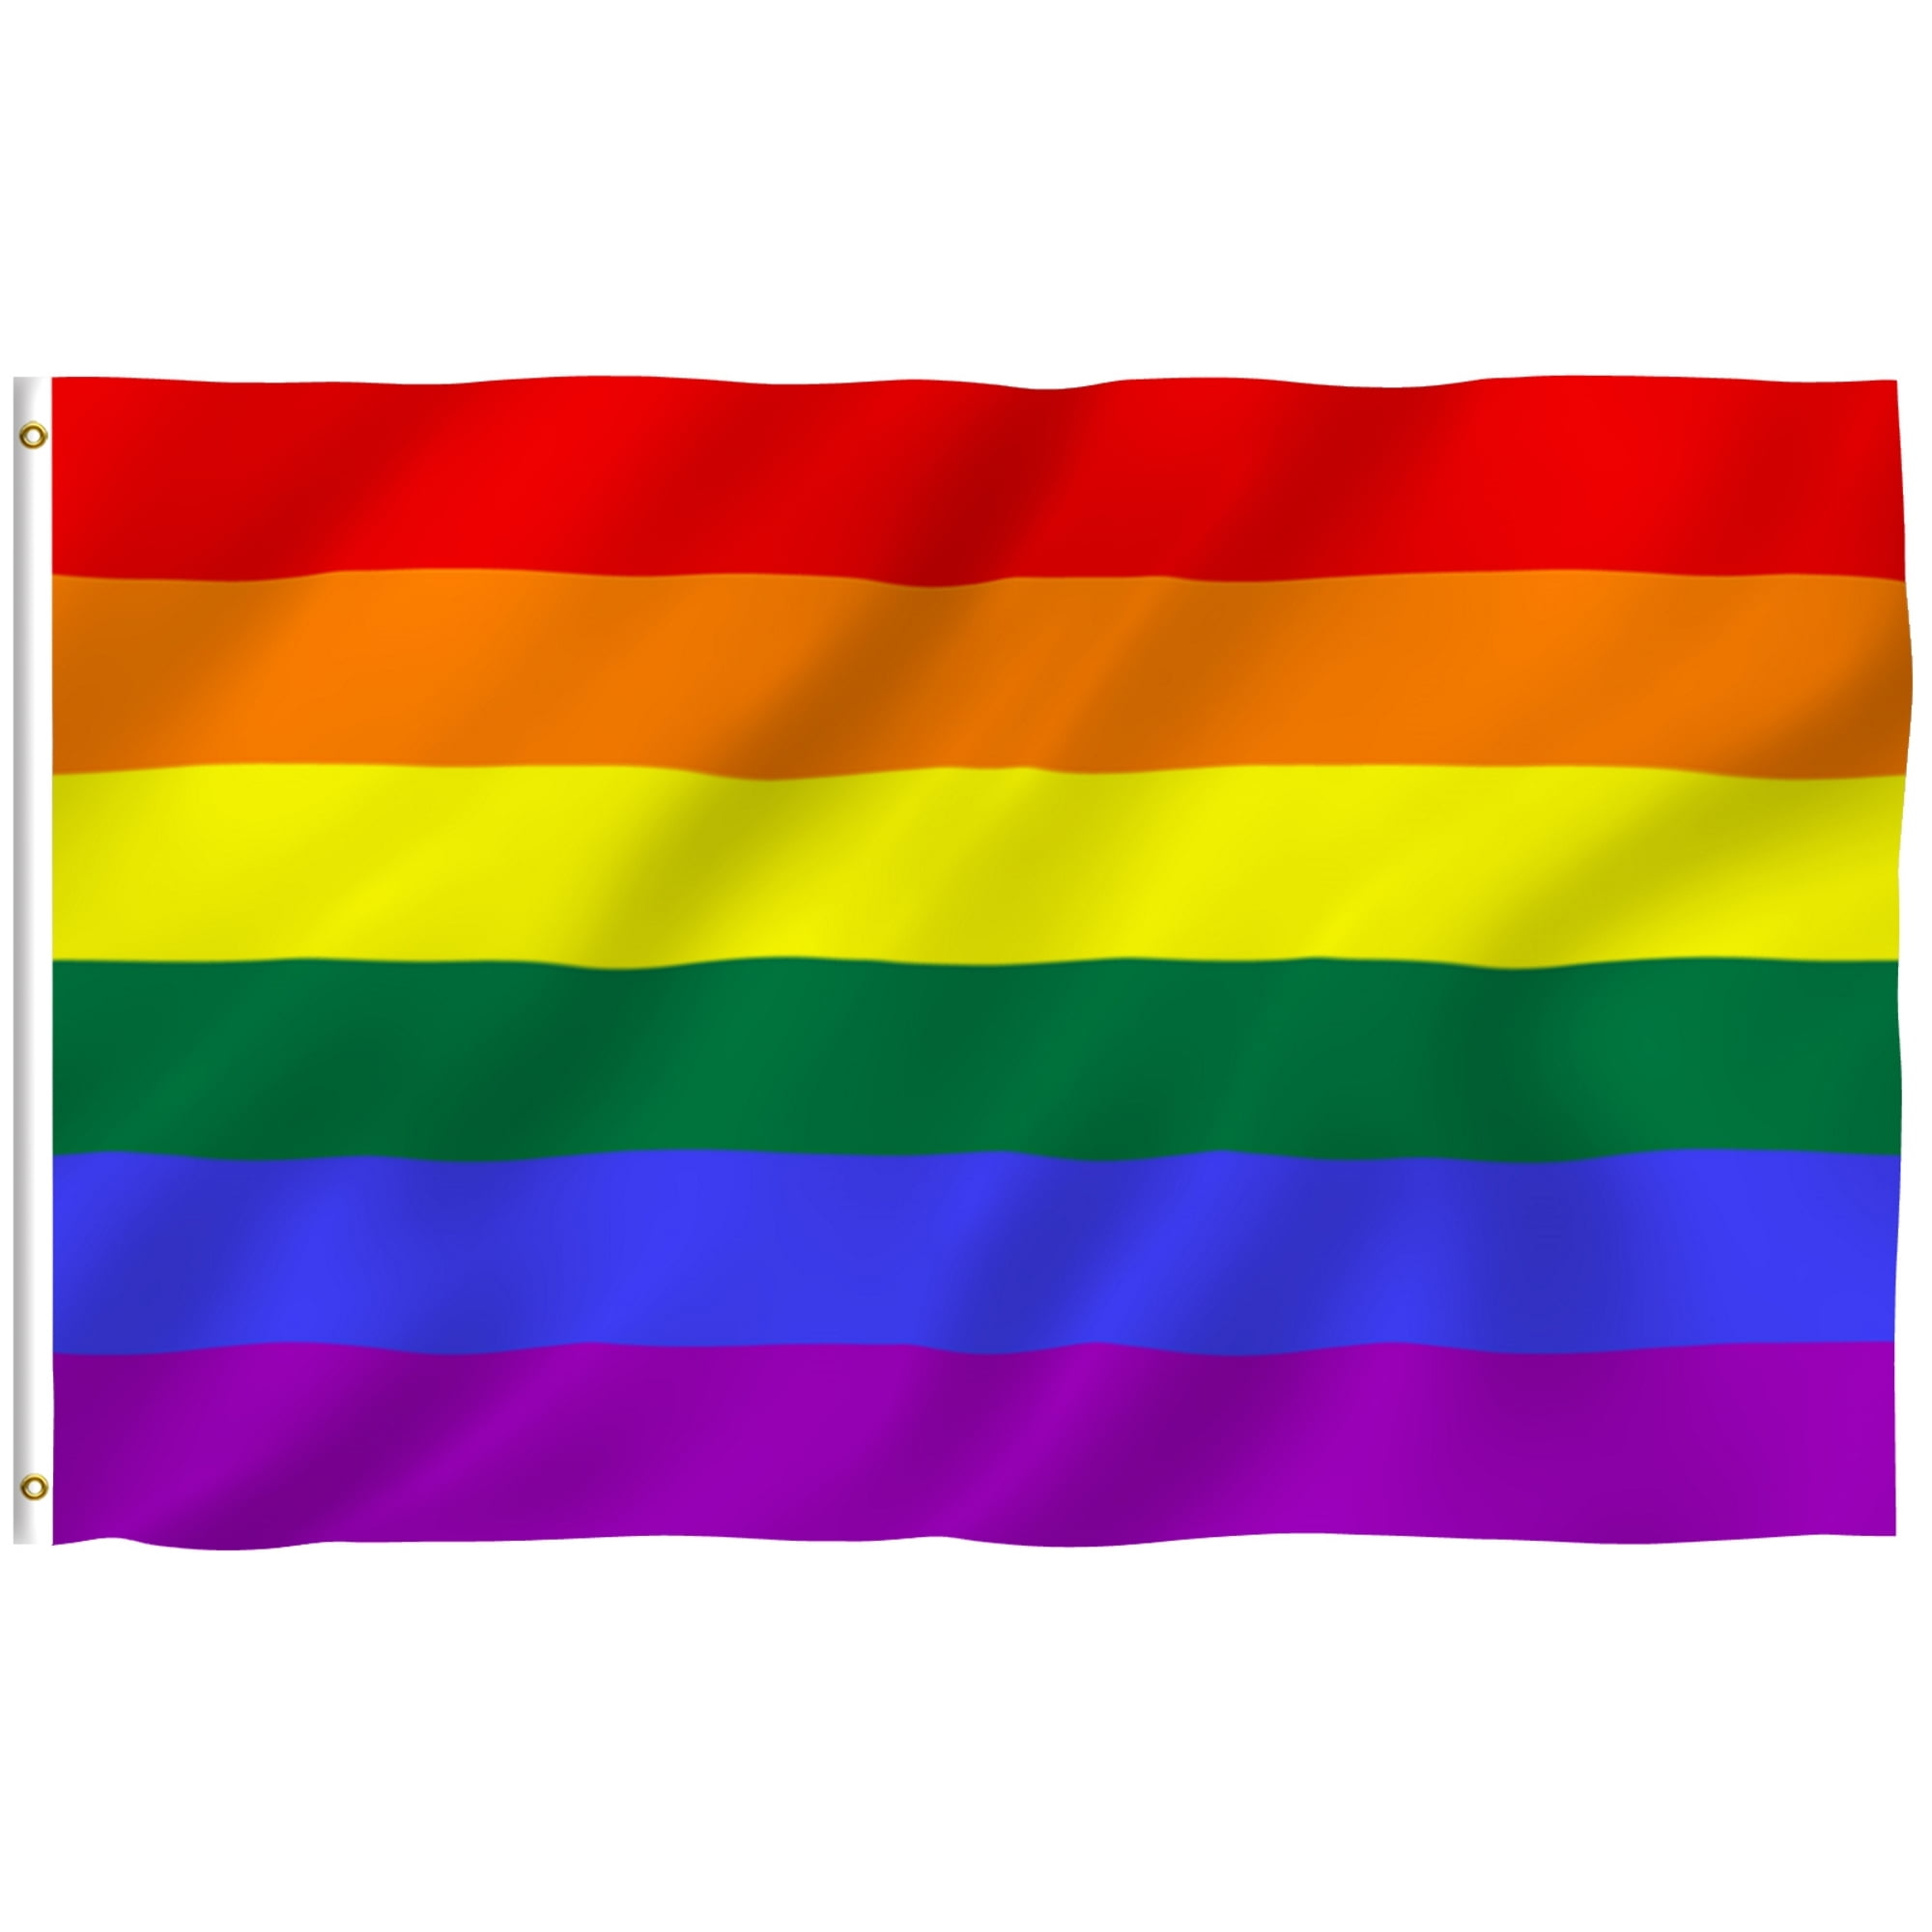 DONALD TRUMP FLAG *FREE SHIP USA SELLER!* LGBTQ Rainbow USA Gay Sign Poster 3x5 